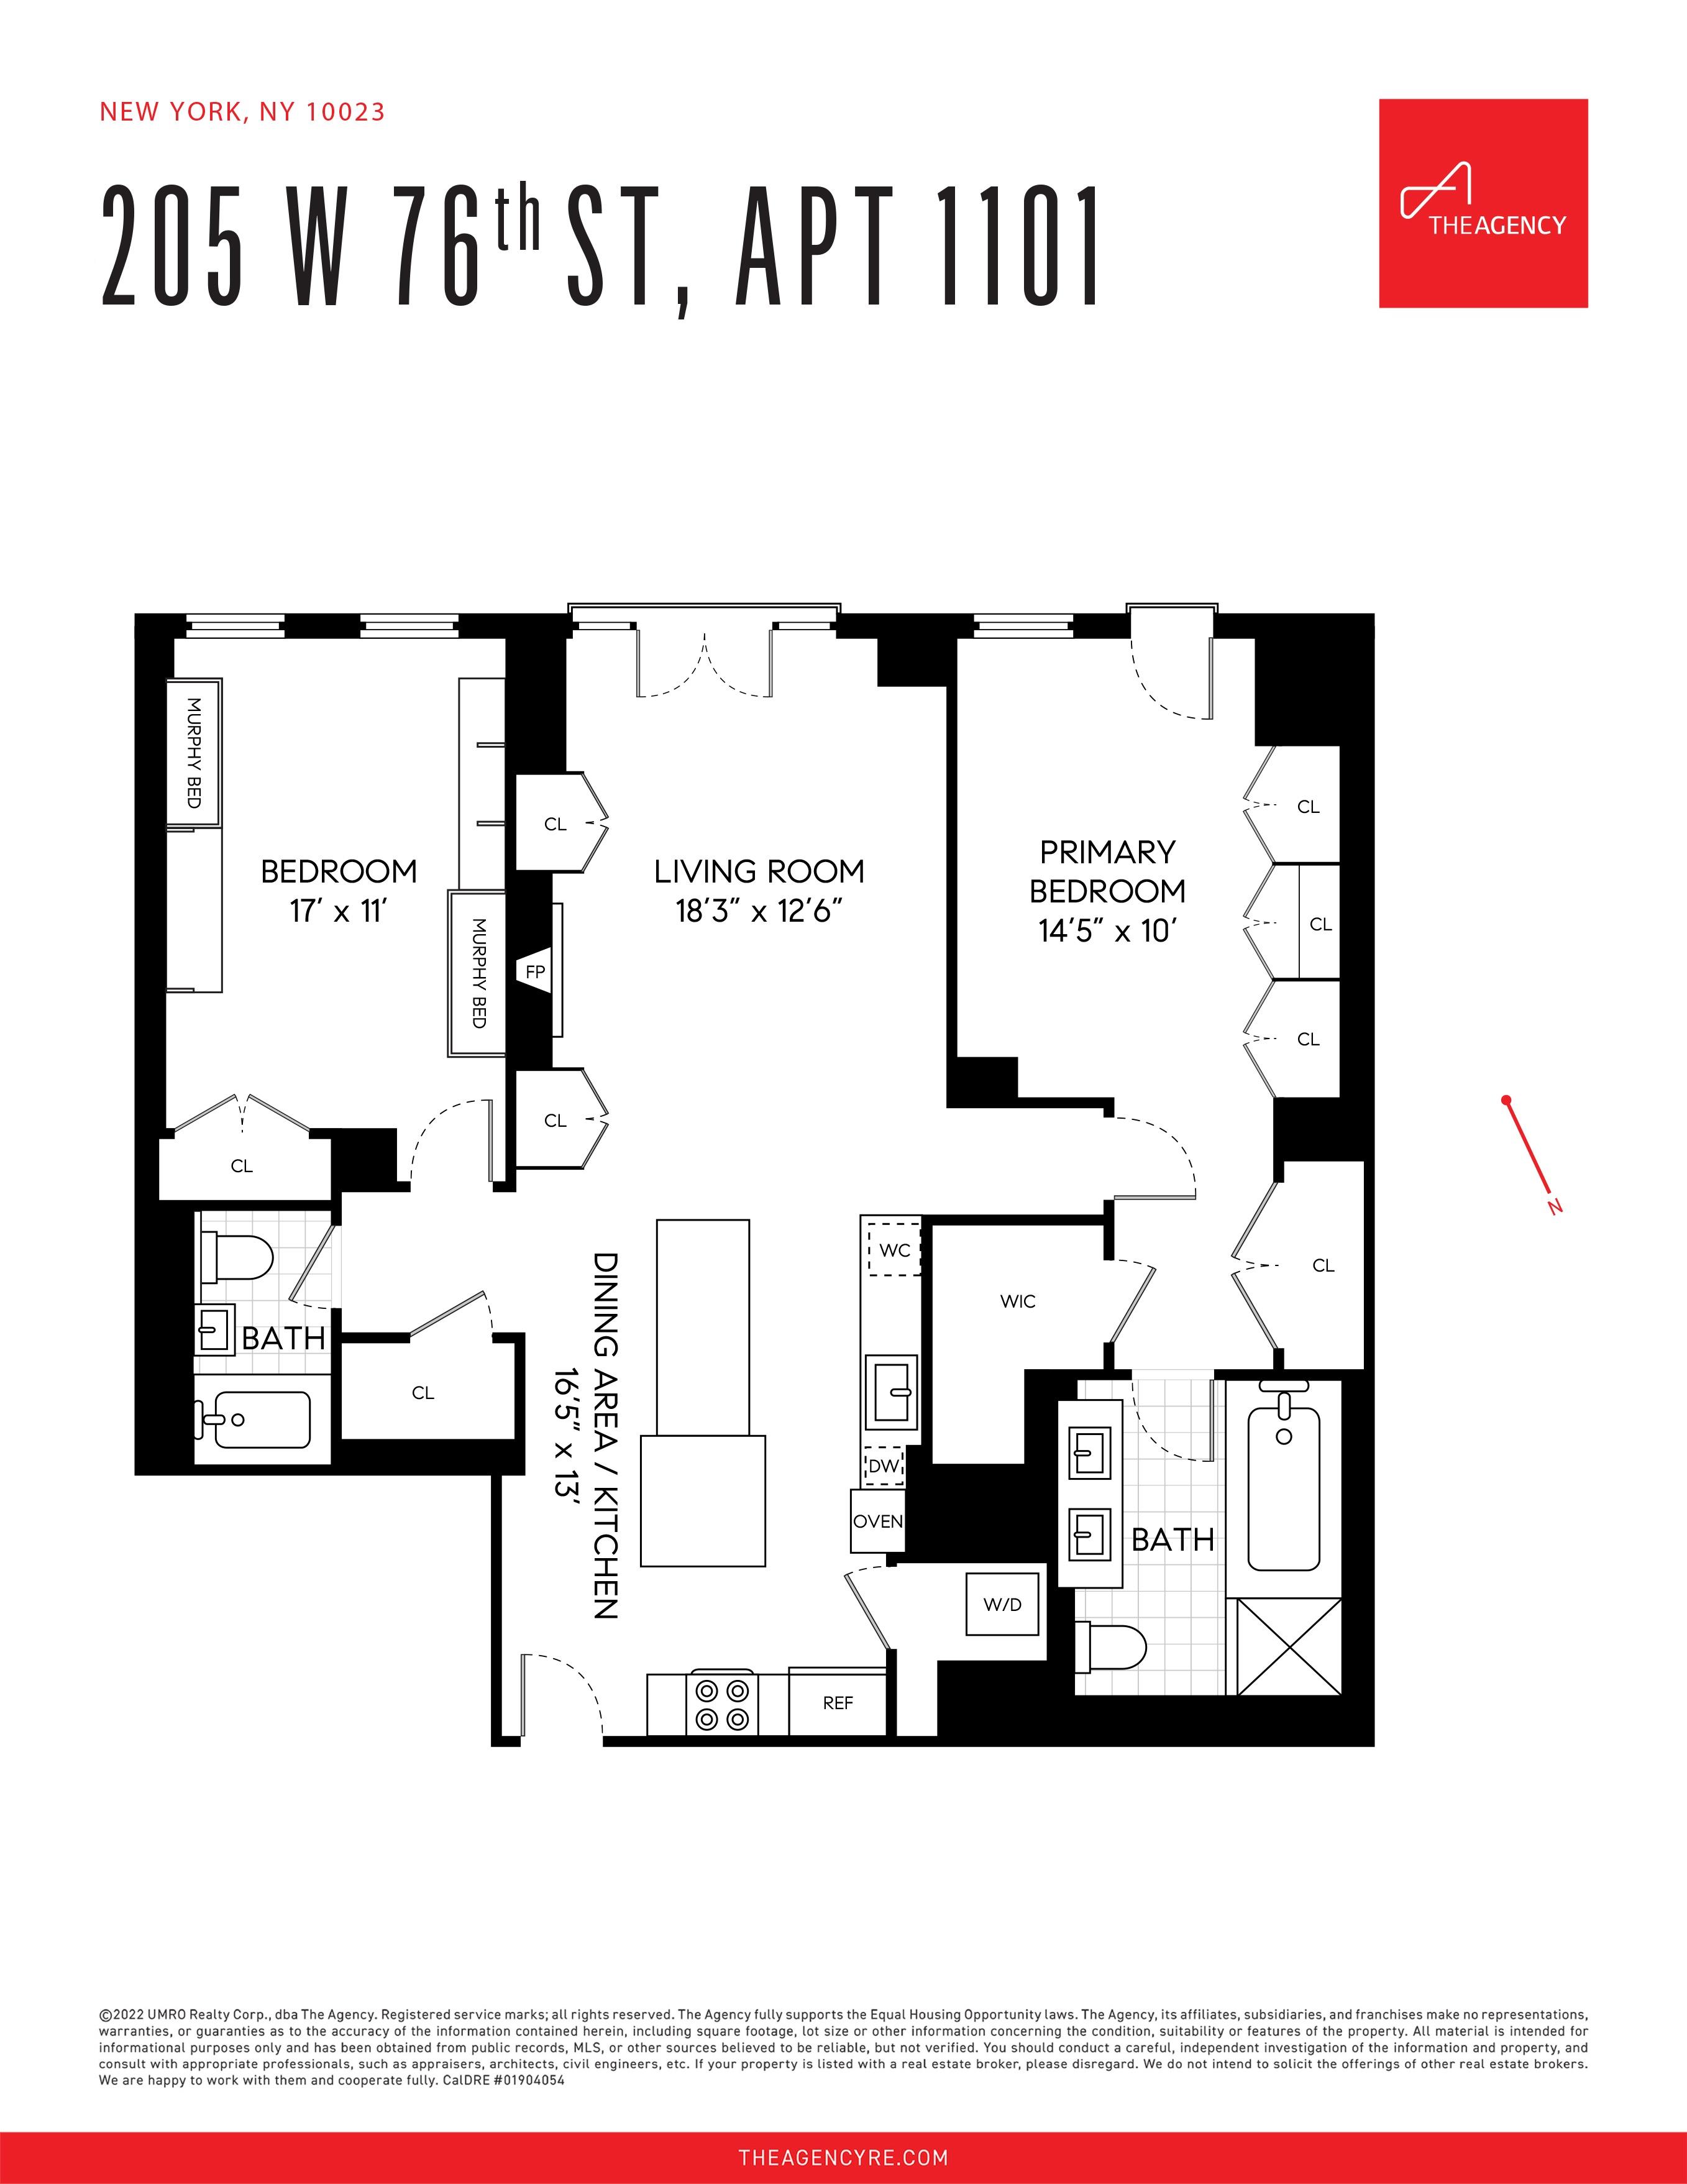 Floorplan for 205 West 76th Street, 1101